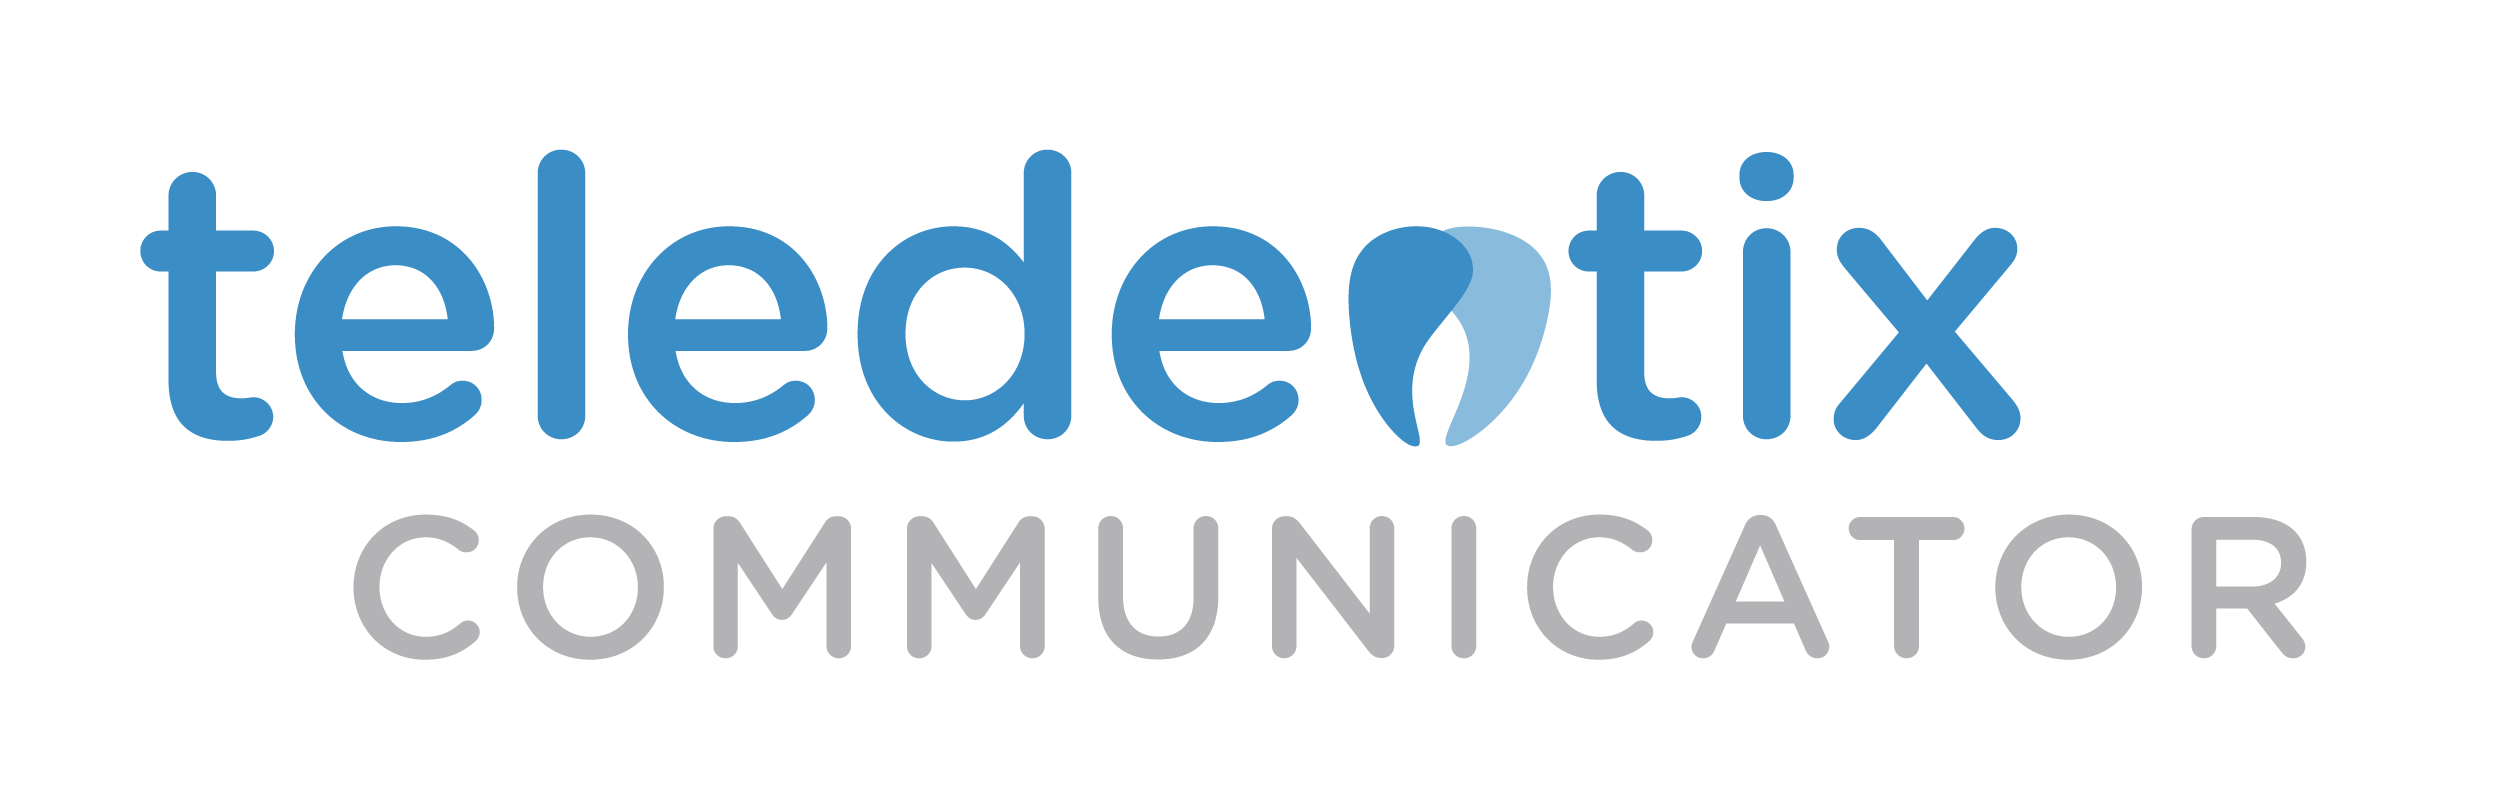 Teledentix_Communicator-1